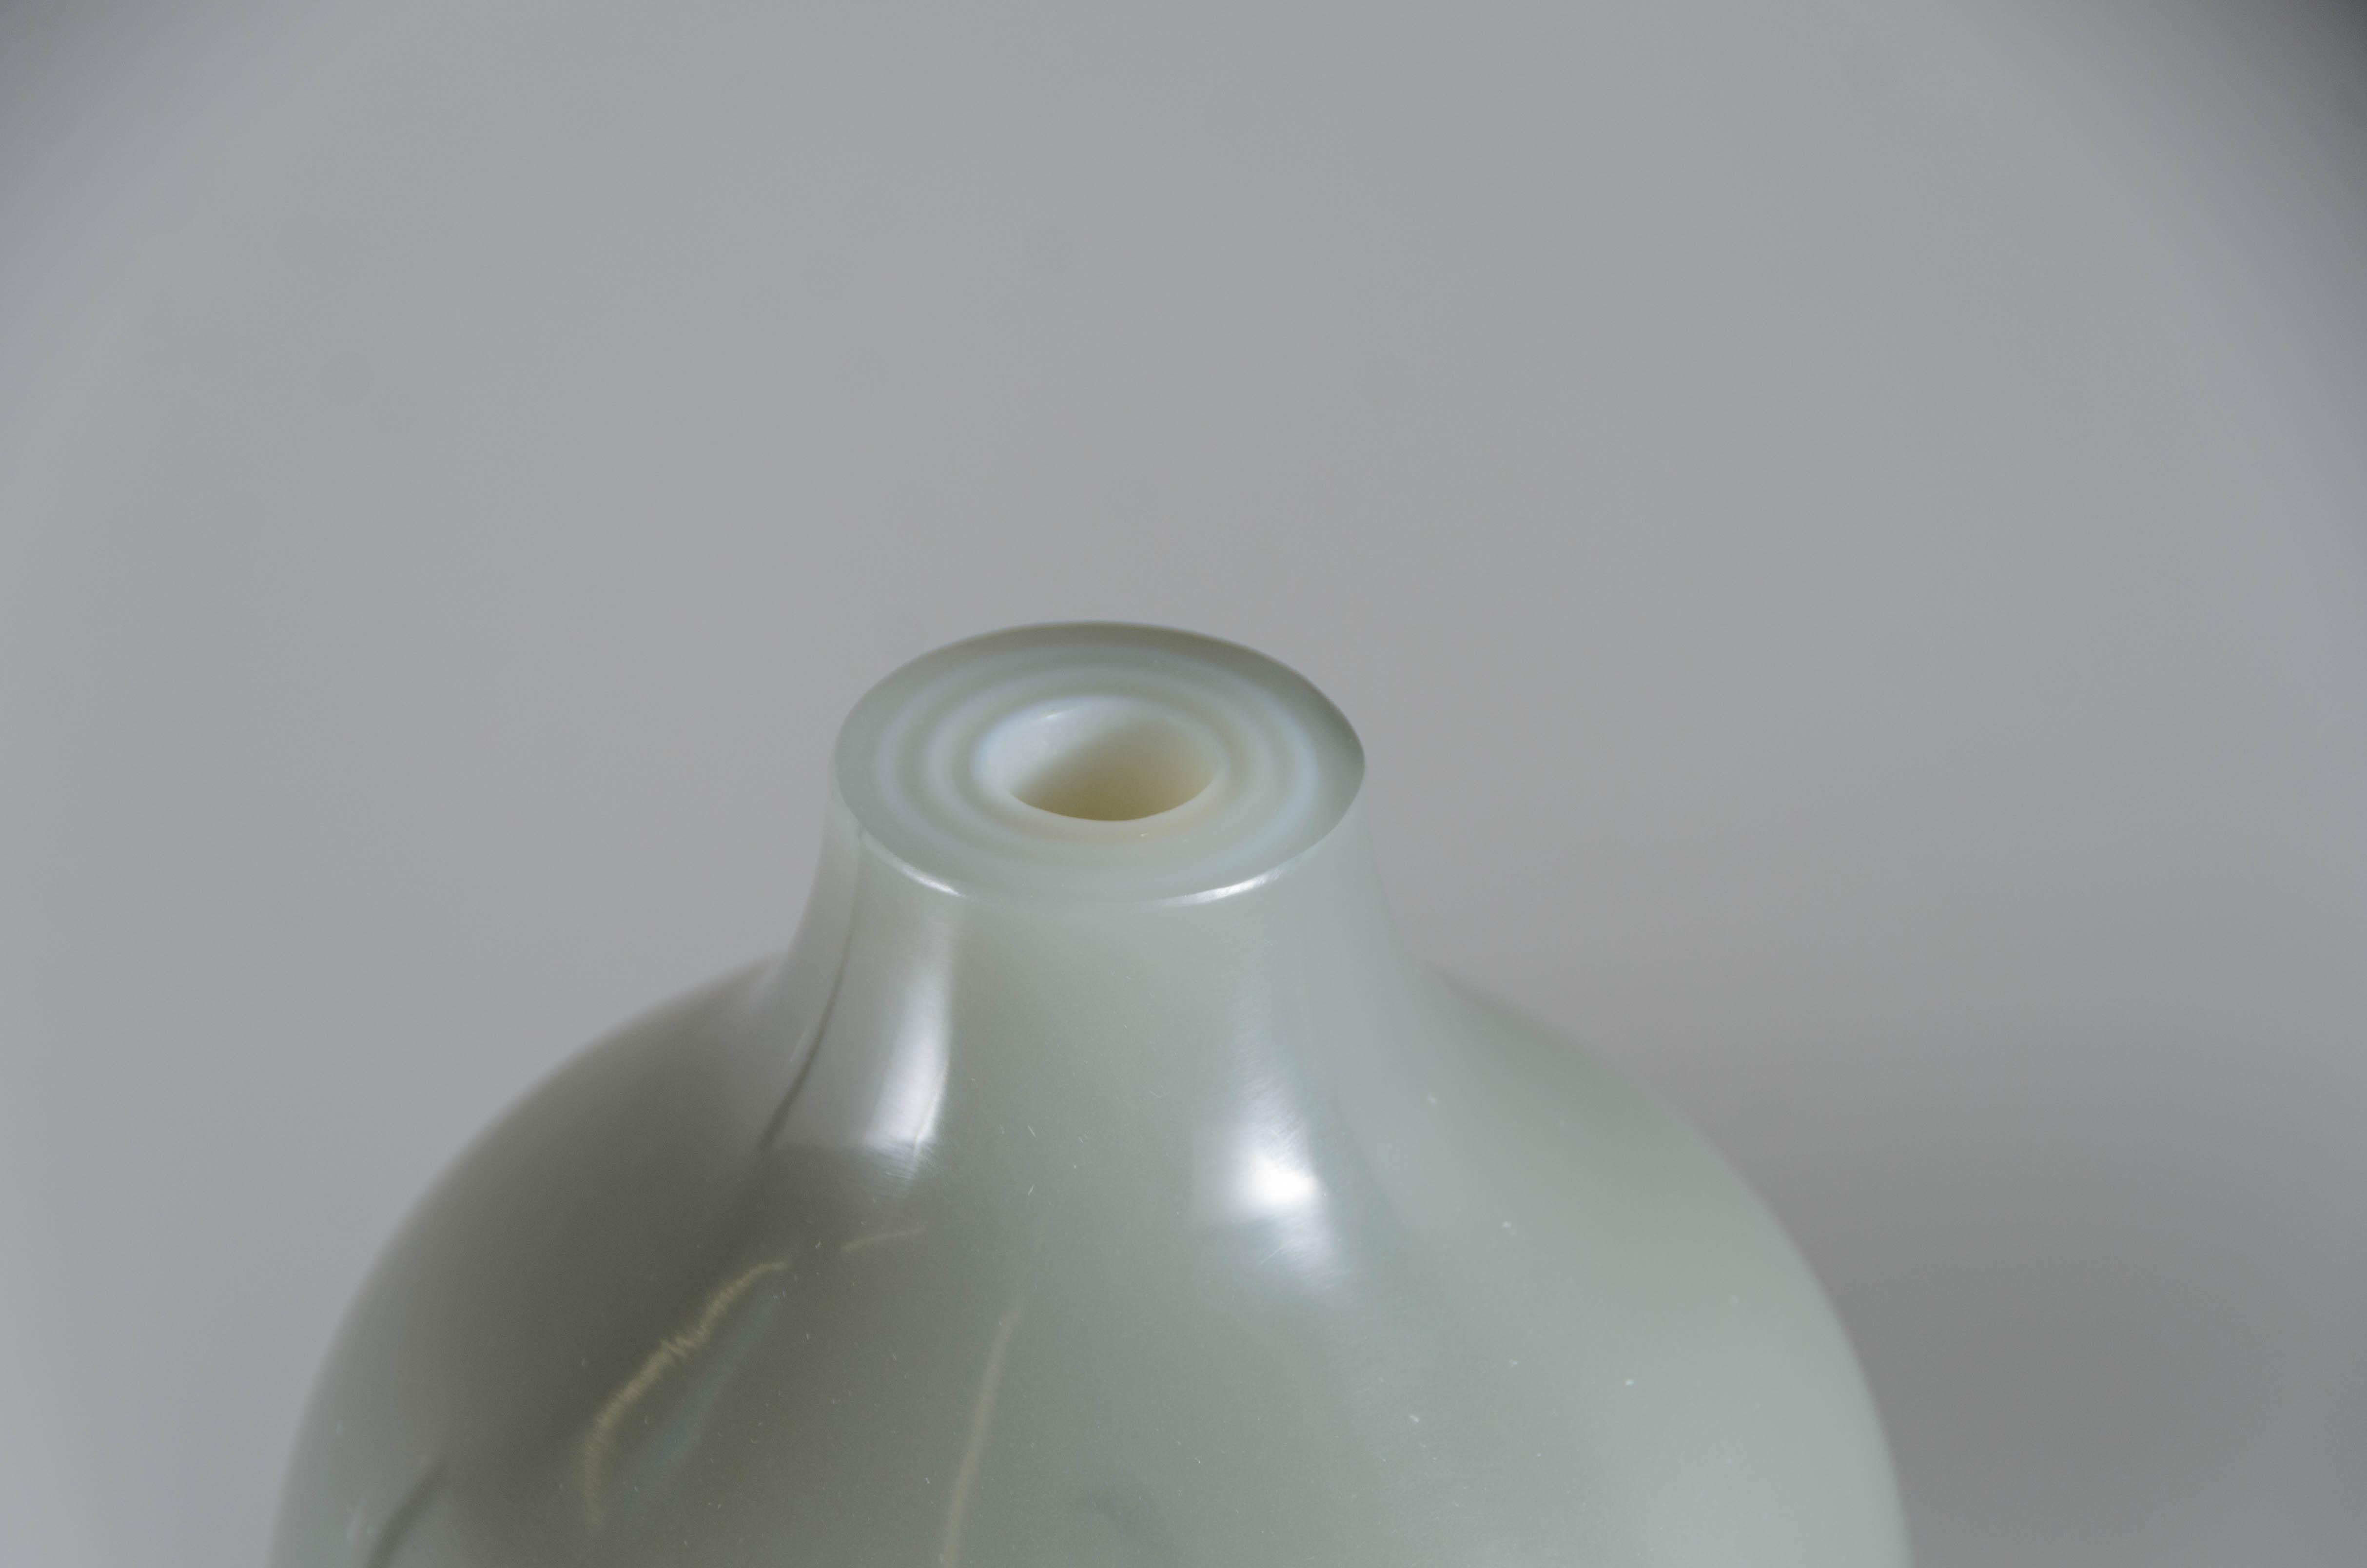 Große Kürbis-Vase
Graues Pekingglas
Handgeschnitzt
Limitierte Auflage
8 